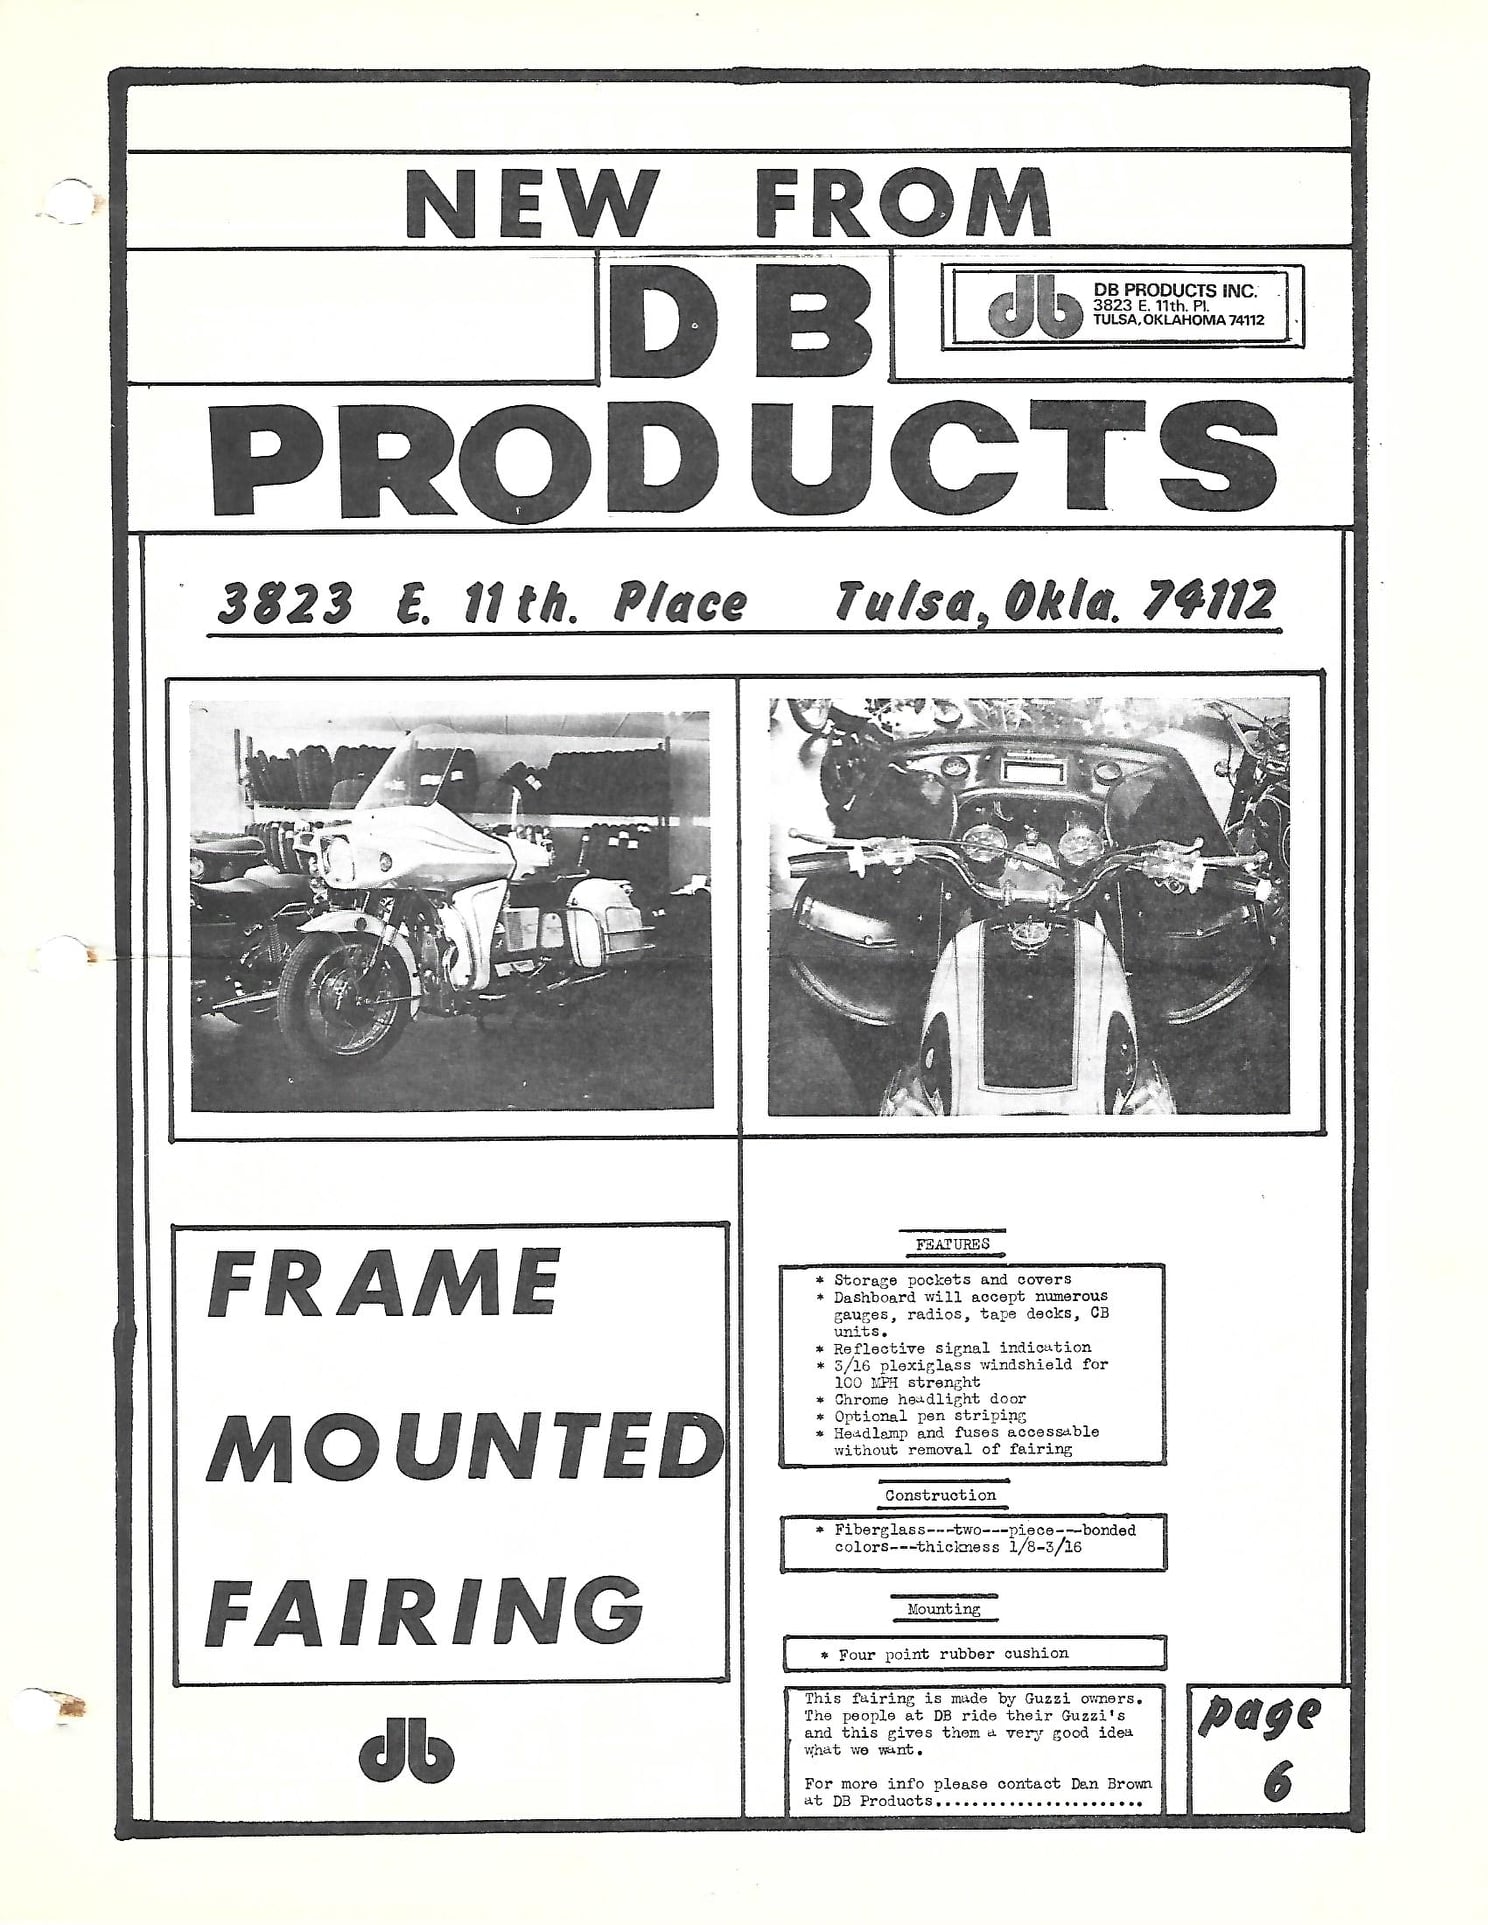 DB Products advertisement: Frame mounted fairing. Applicable to Moto Guzzi V700, V7 Special, Ambassador, 850 GT, 850 GT California, Eldorado, and 850 California Police models.